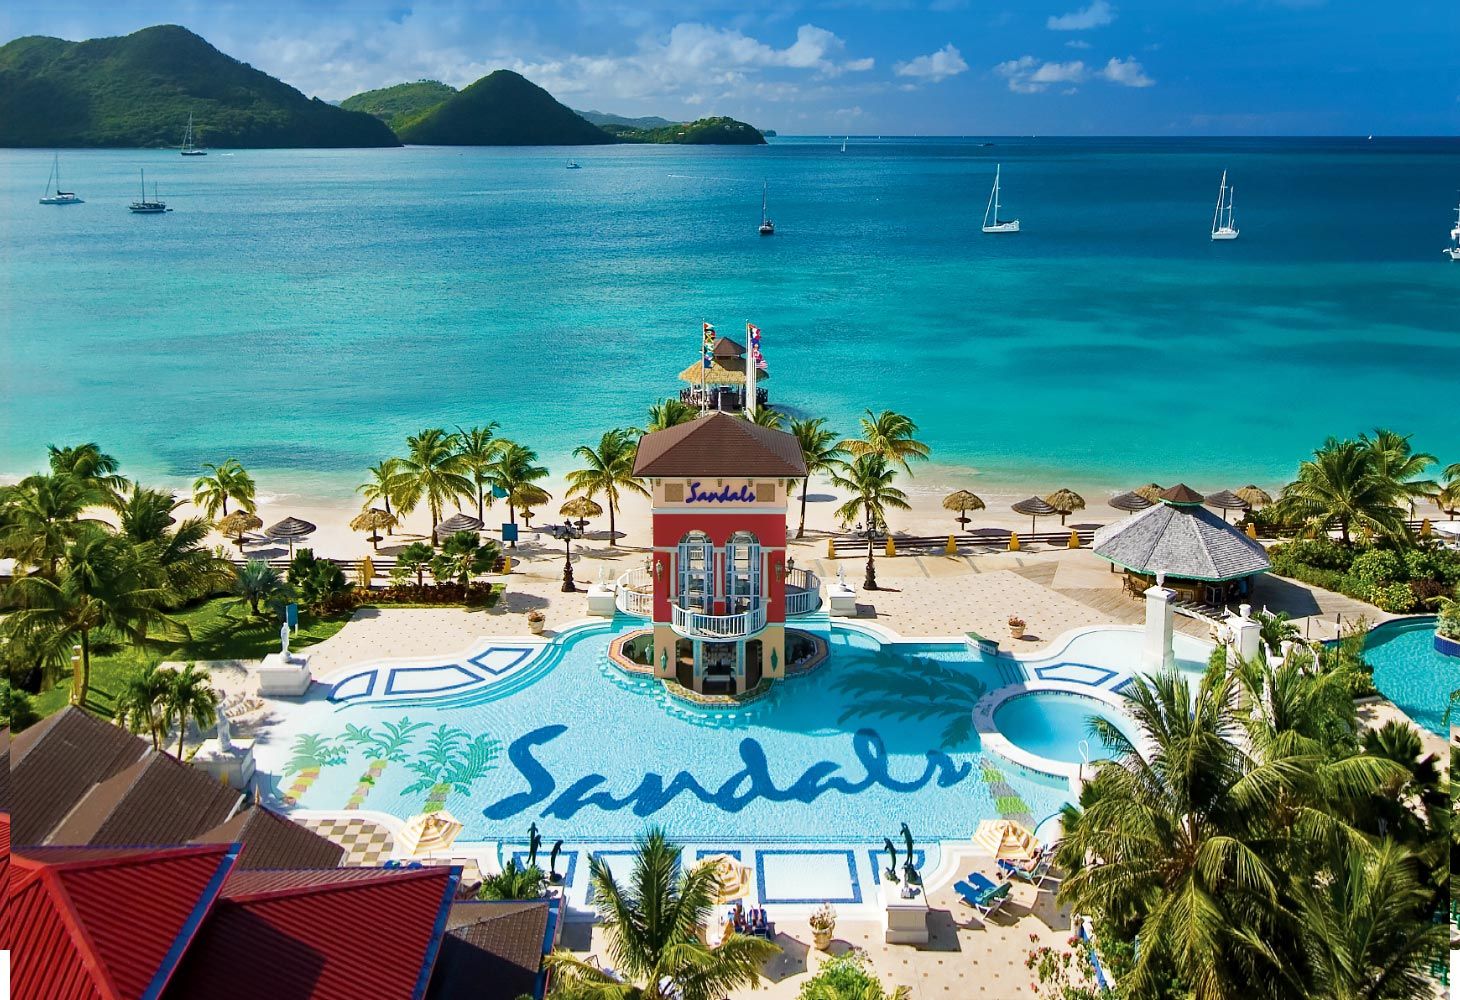 Sandals all-inclusive resort in Saint Lucia